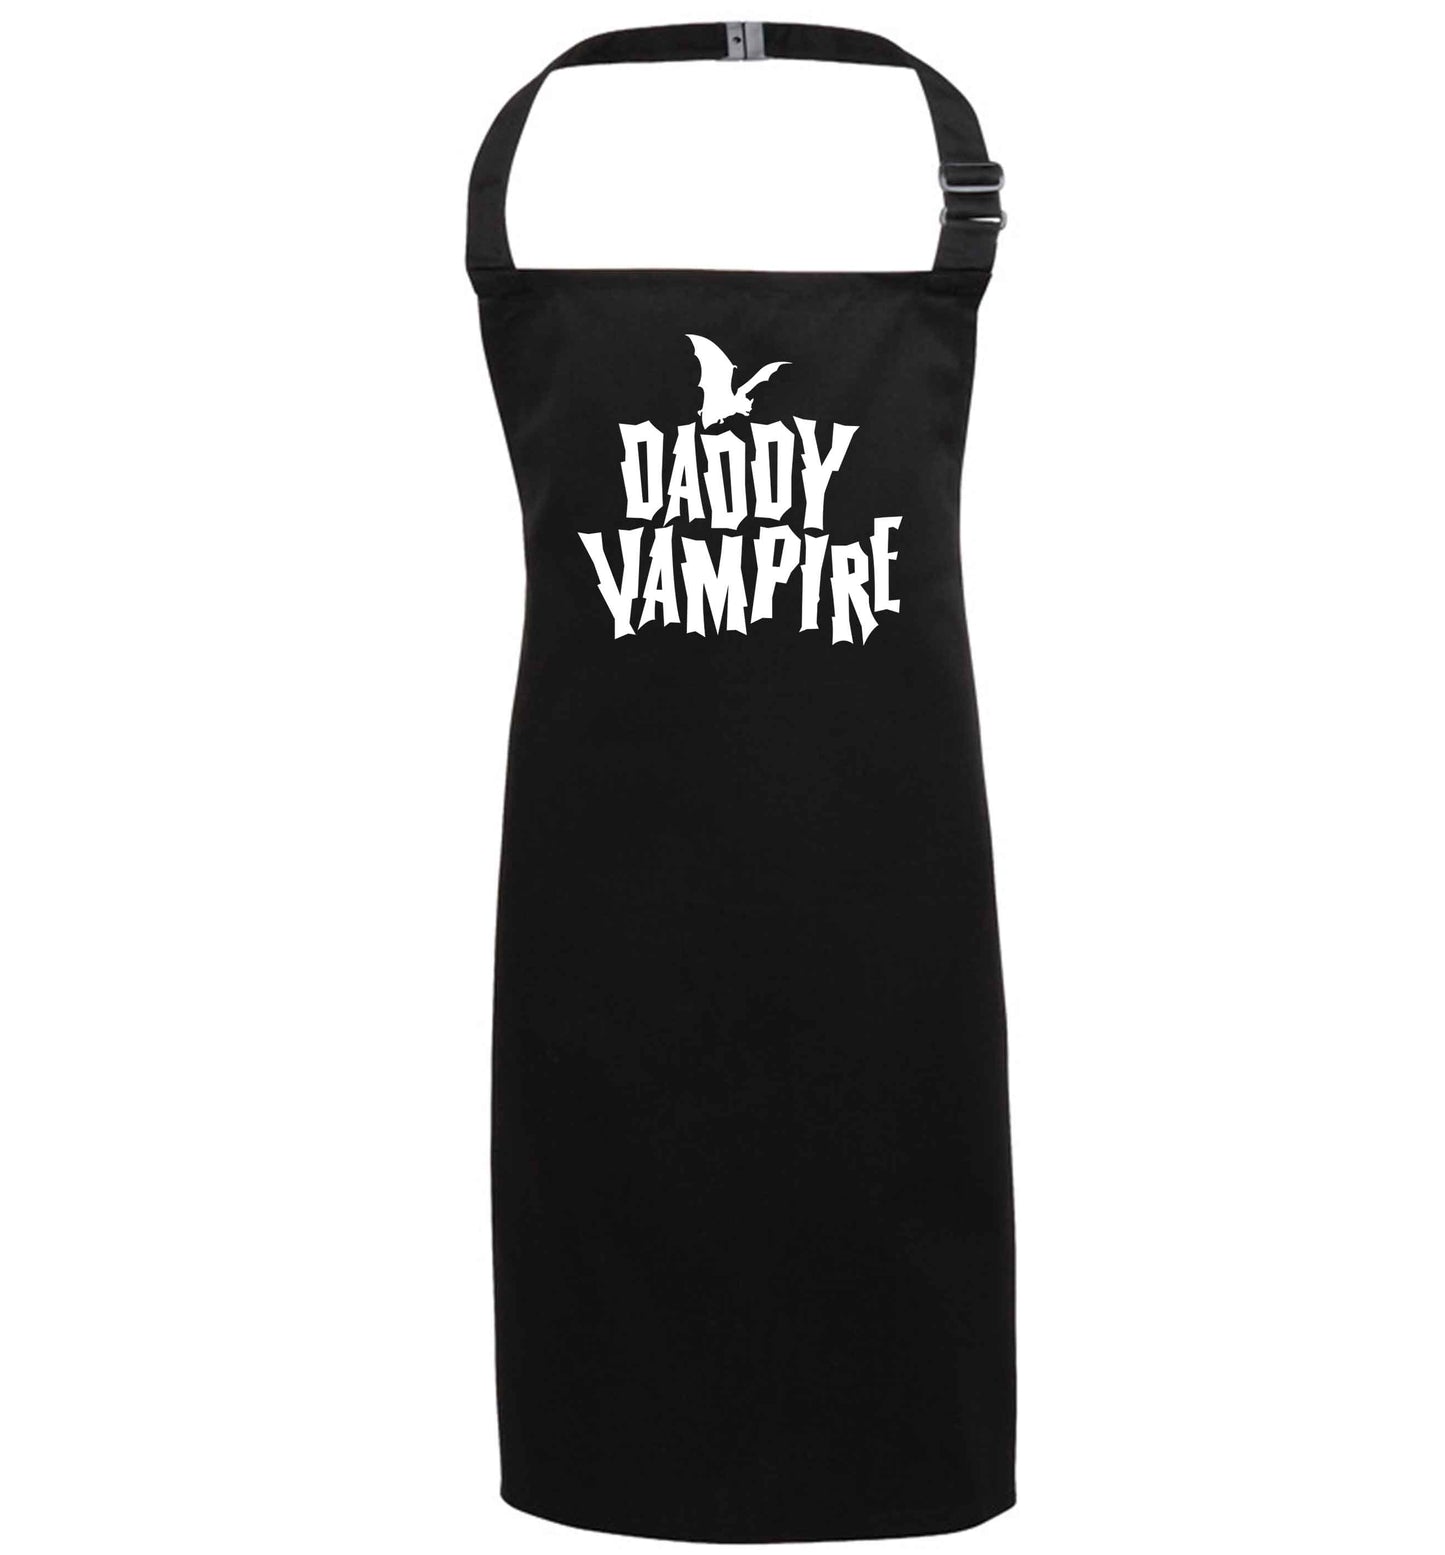 Daddy vampire black apron 7-10 years